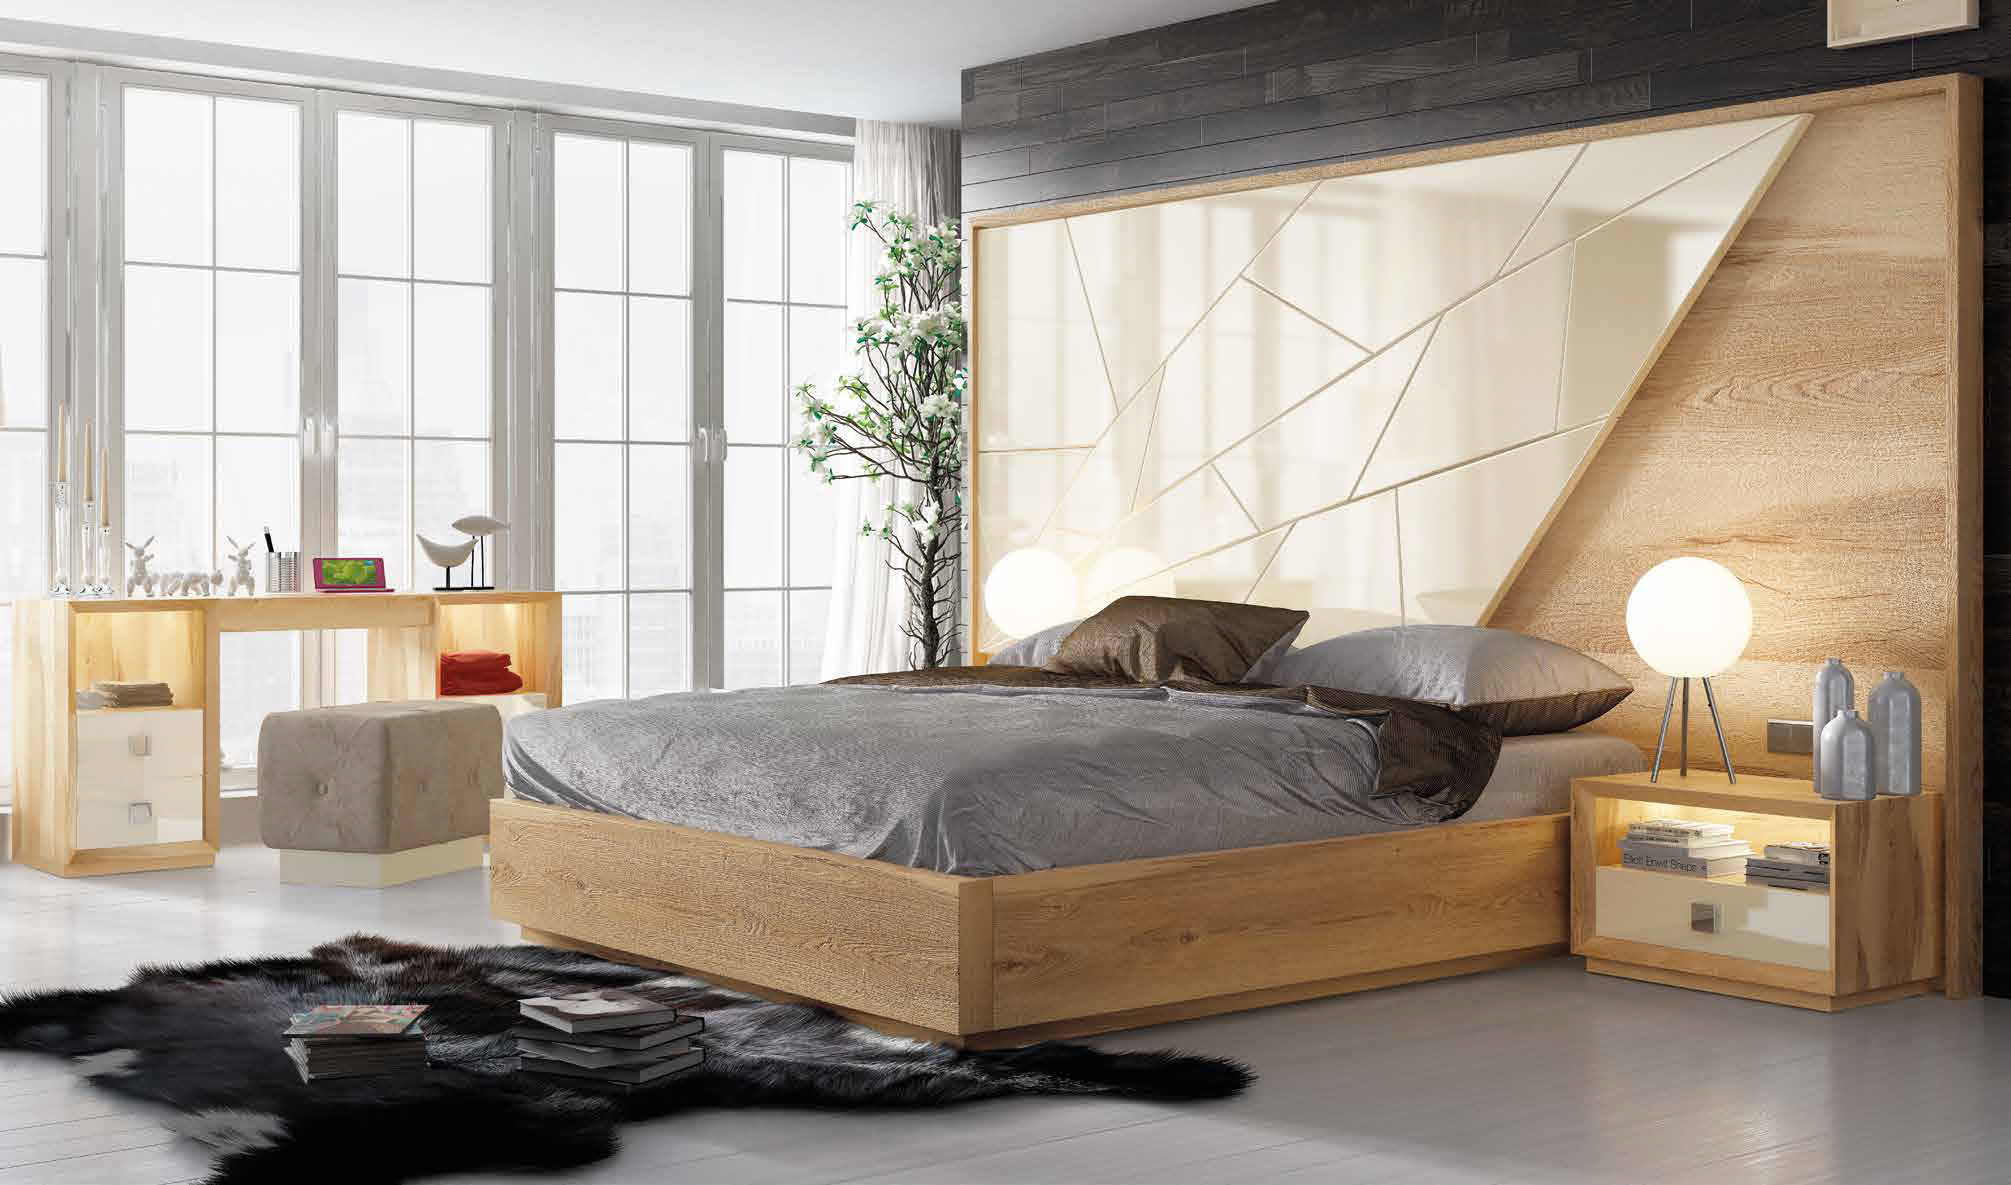 Brands Franco Furniture Bedrooms vol2, Spain DOR 47